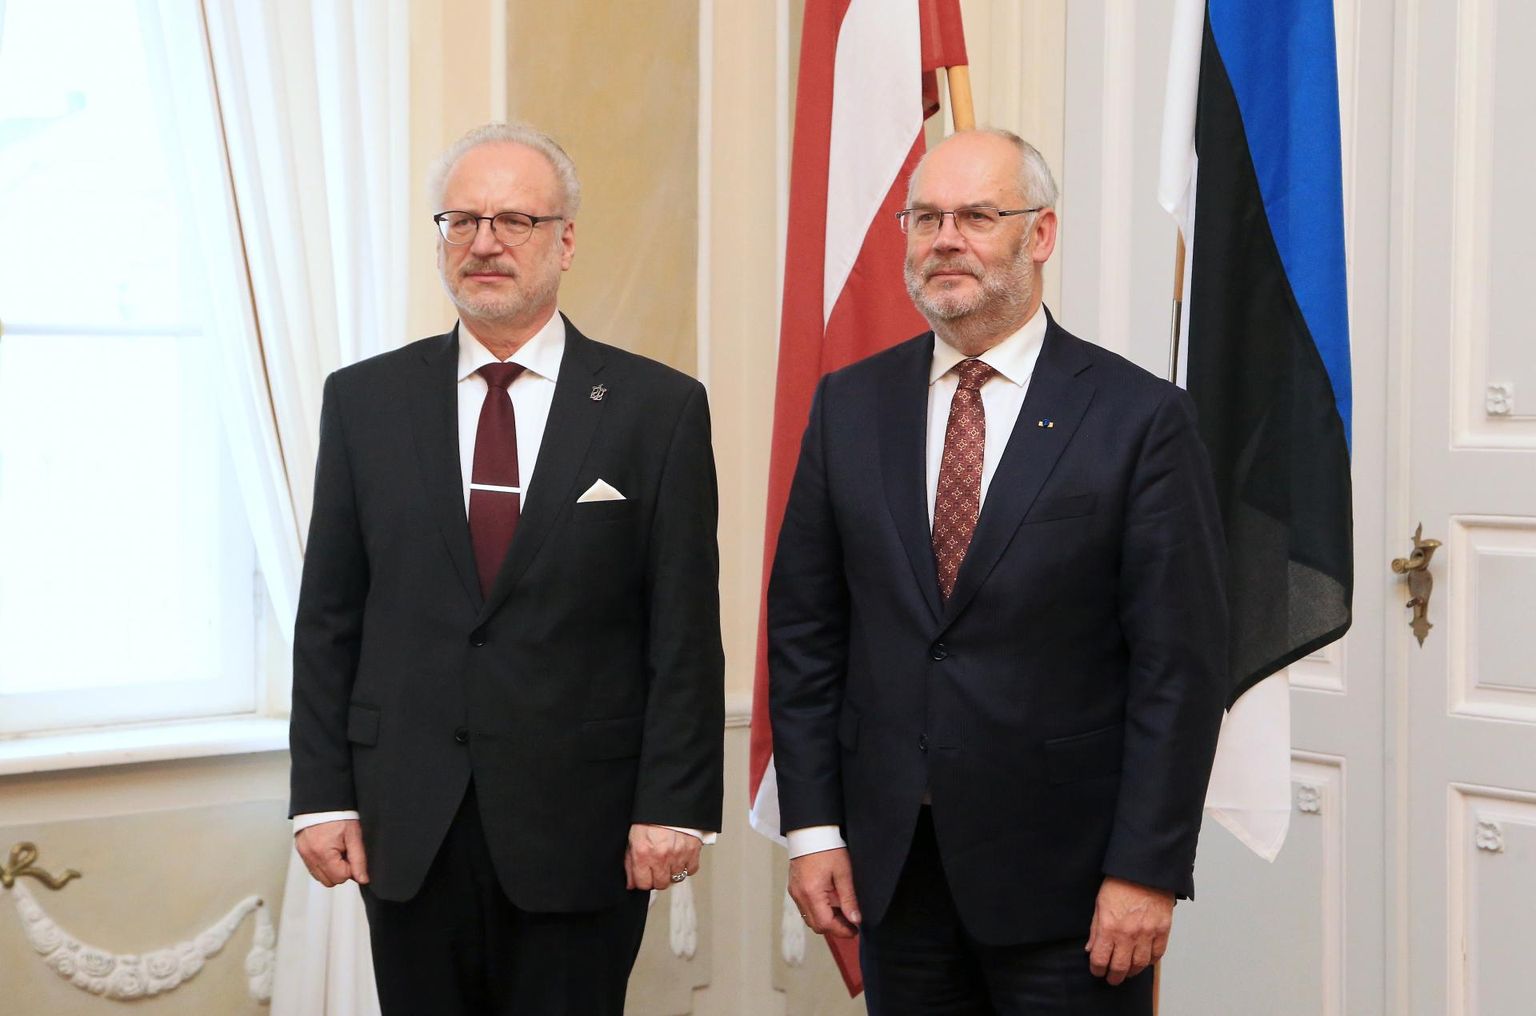 Läti presidendi Egils Levitsi töövisiit Eestisse.
Egils Levits (vasakul) ja Eesti president Alar Karis. 